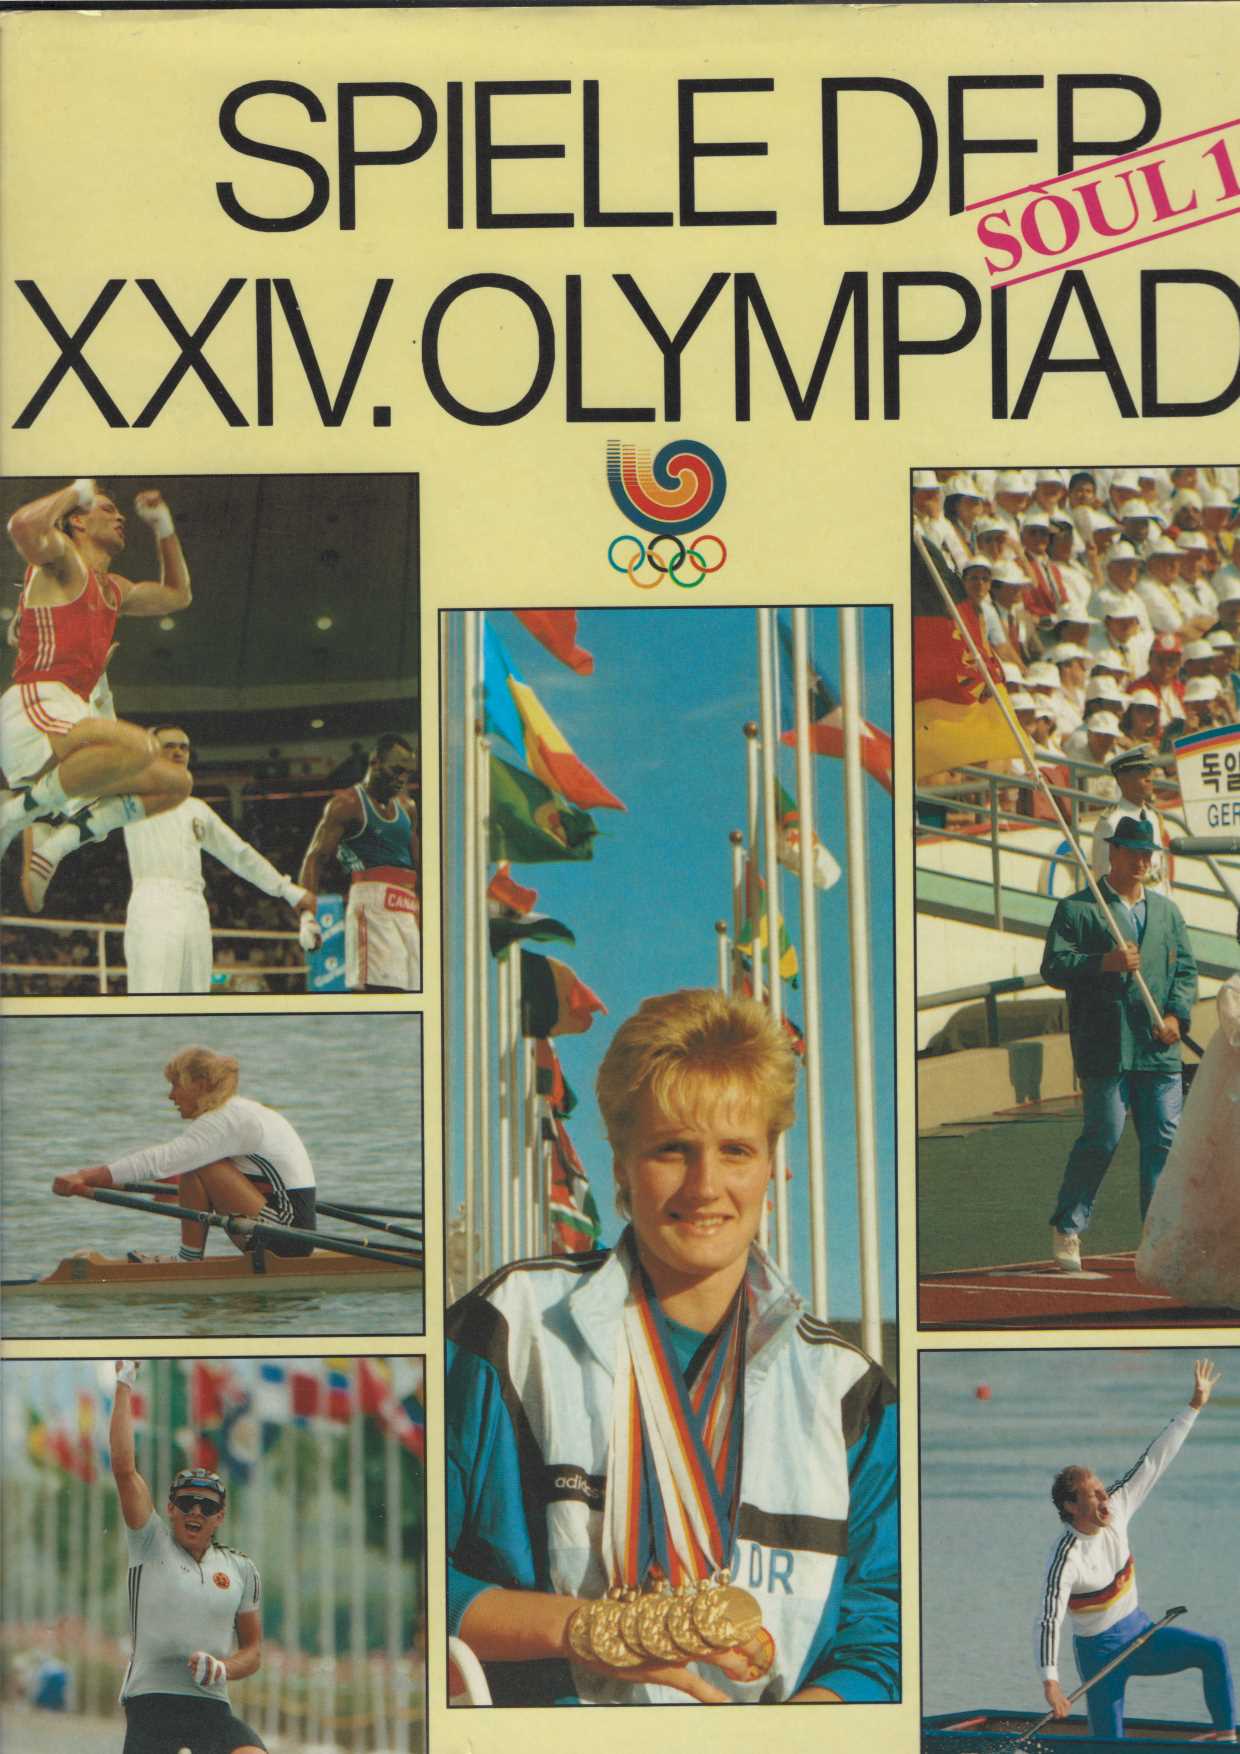 Spiele der XXIV. (24.) Olympiade Soul (Seoul) 1988.